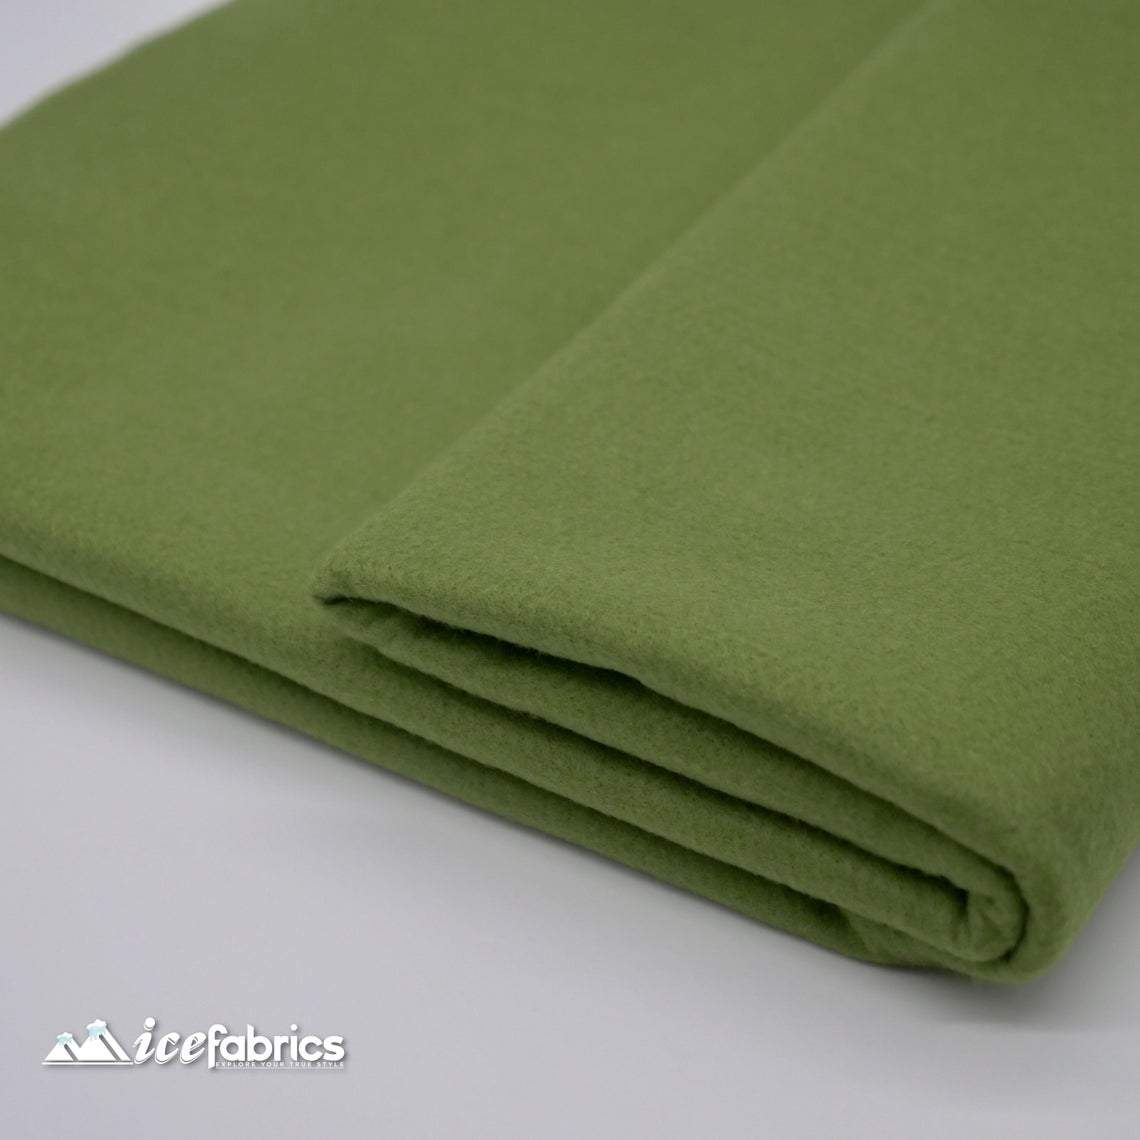 Acrylic Felt Fabric By The Roll | 20 yards | Wholesale Fabric ICE FABRICS Olive Green